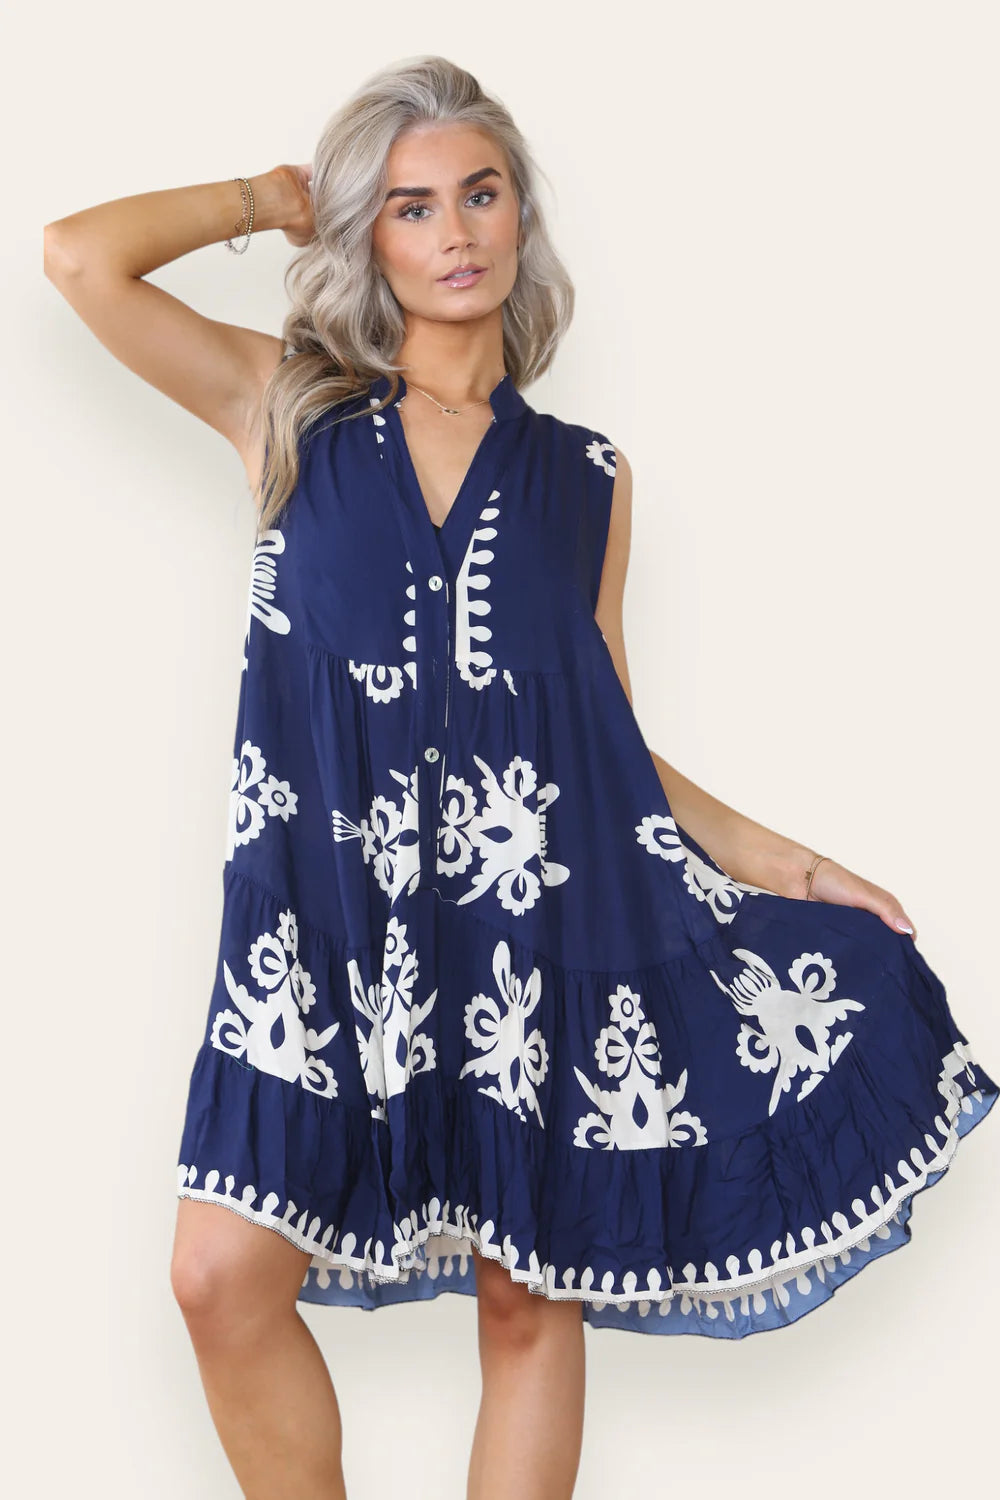 Umi Printed Sleeveless Smock Dress Women UK: Trendy Navy Blue Dress for Any Occasion